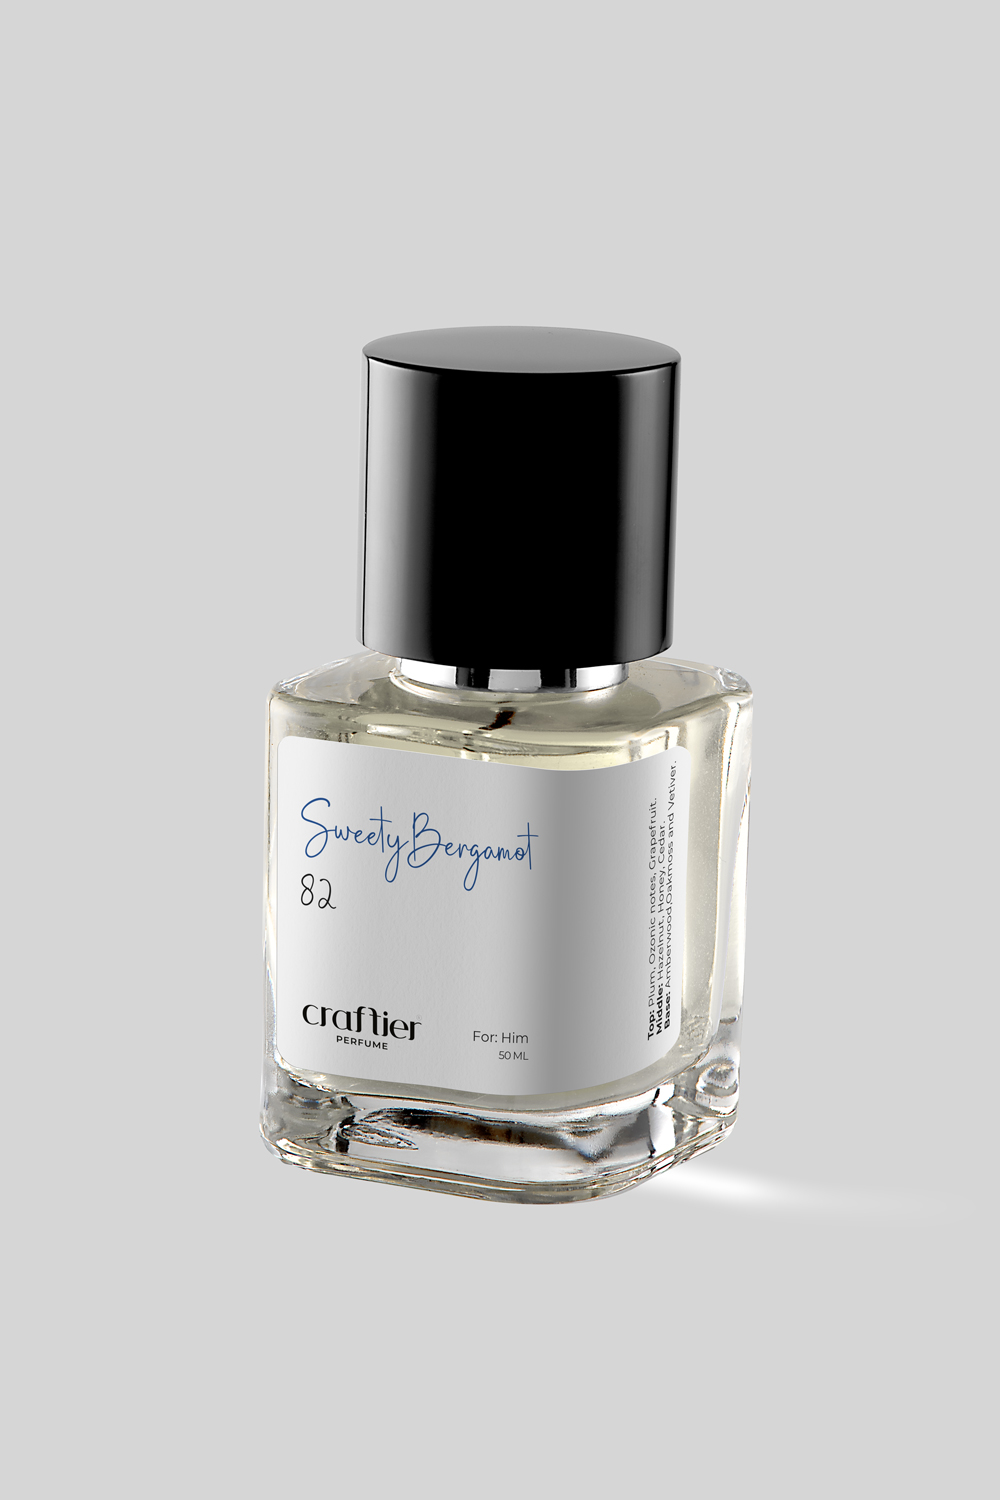 Craftier Perfumes